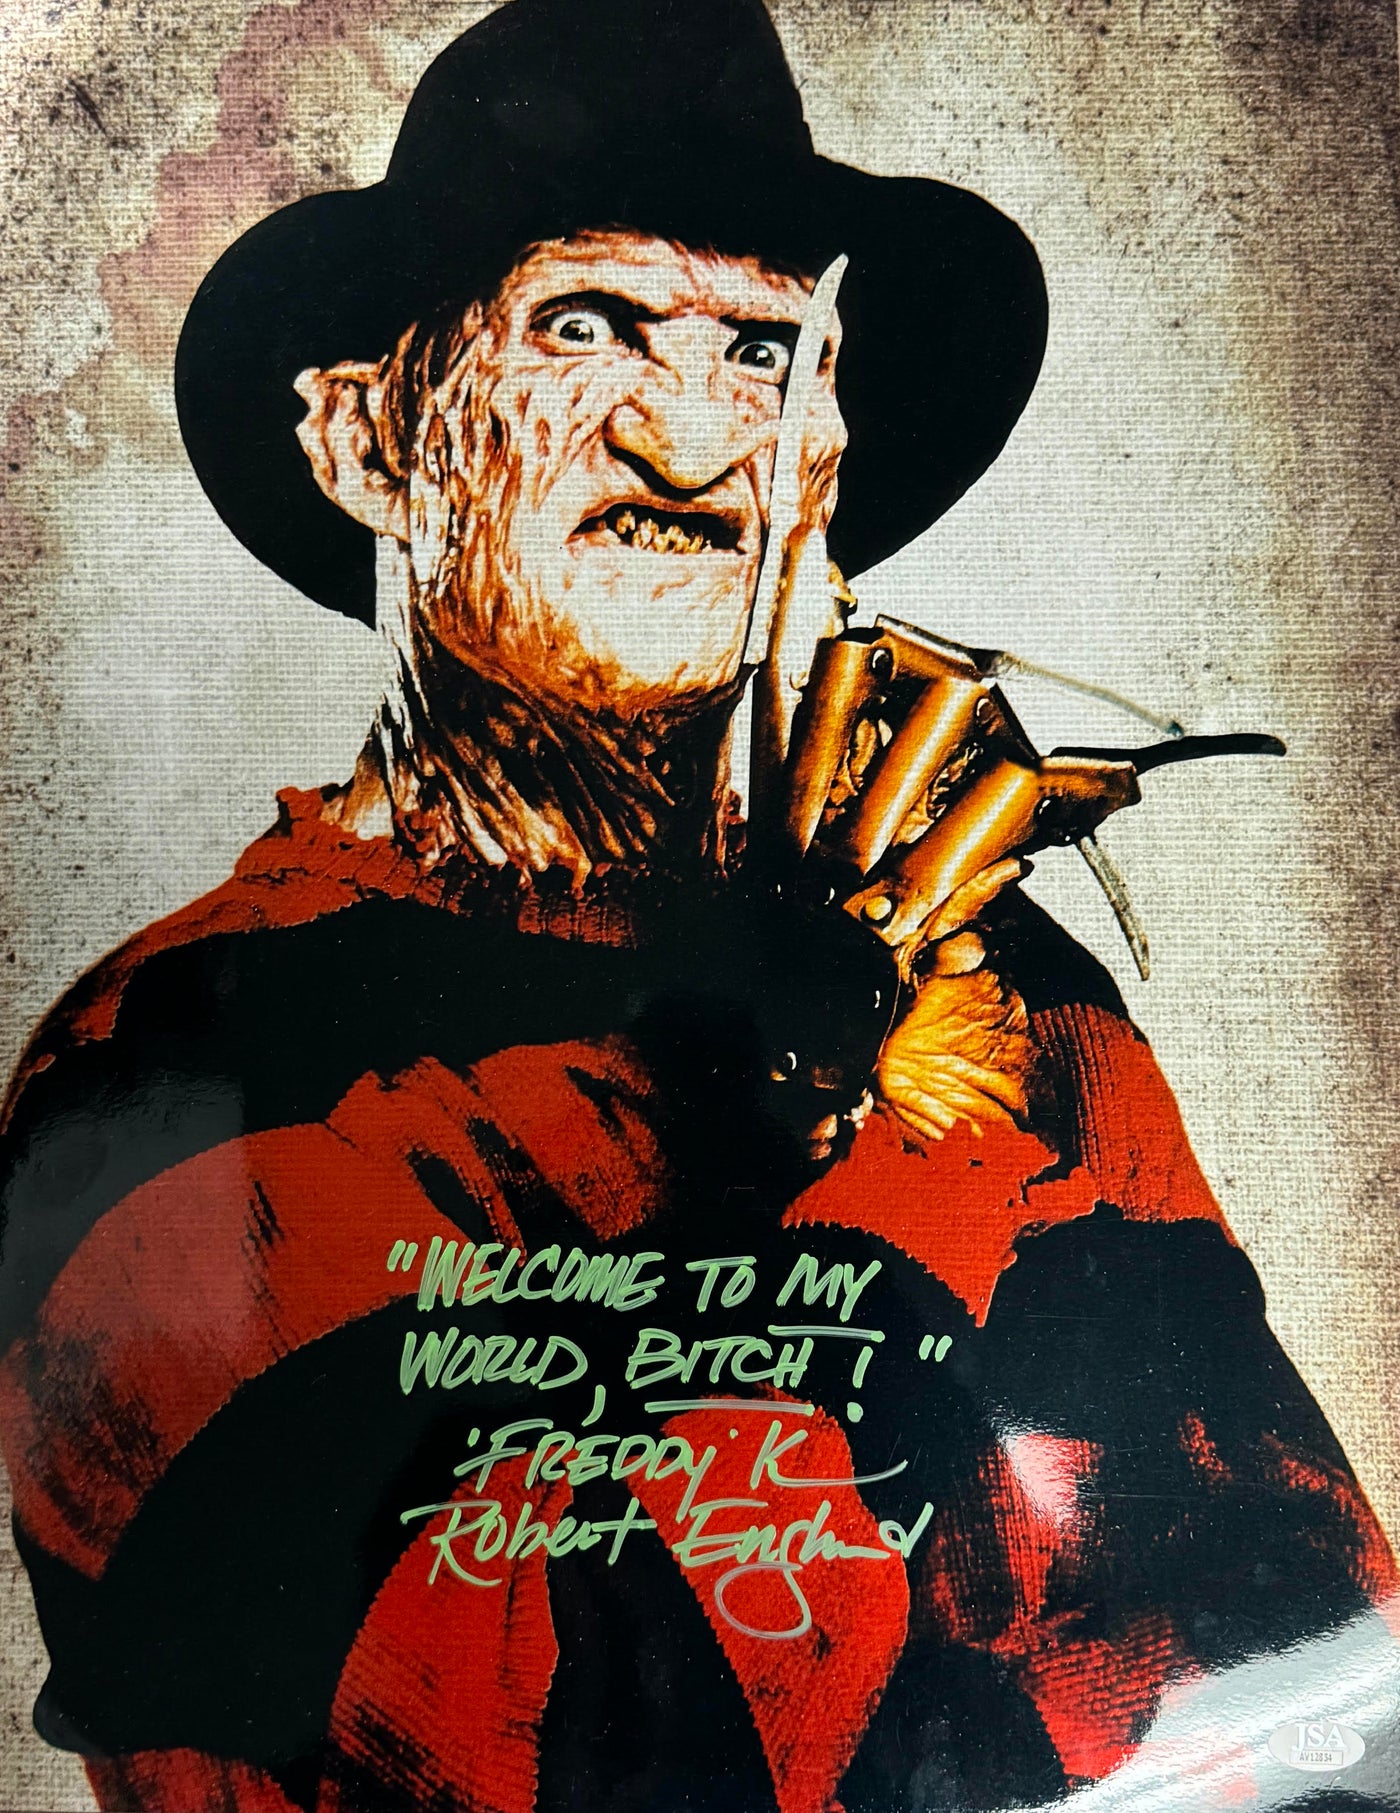 Robert Englund Signed 16x20 Freddy Krueger A Nightmare on Elm Street Photo Autographed JSA COA